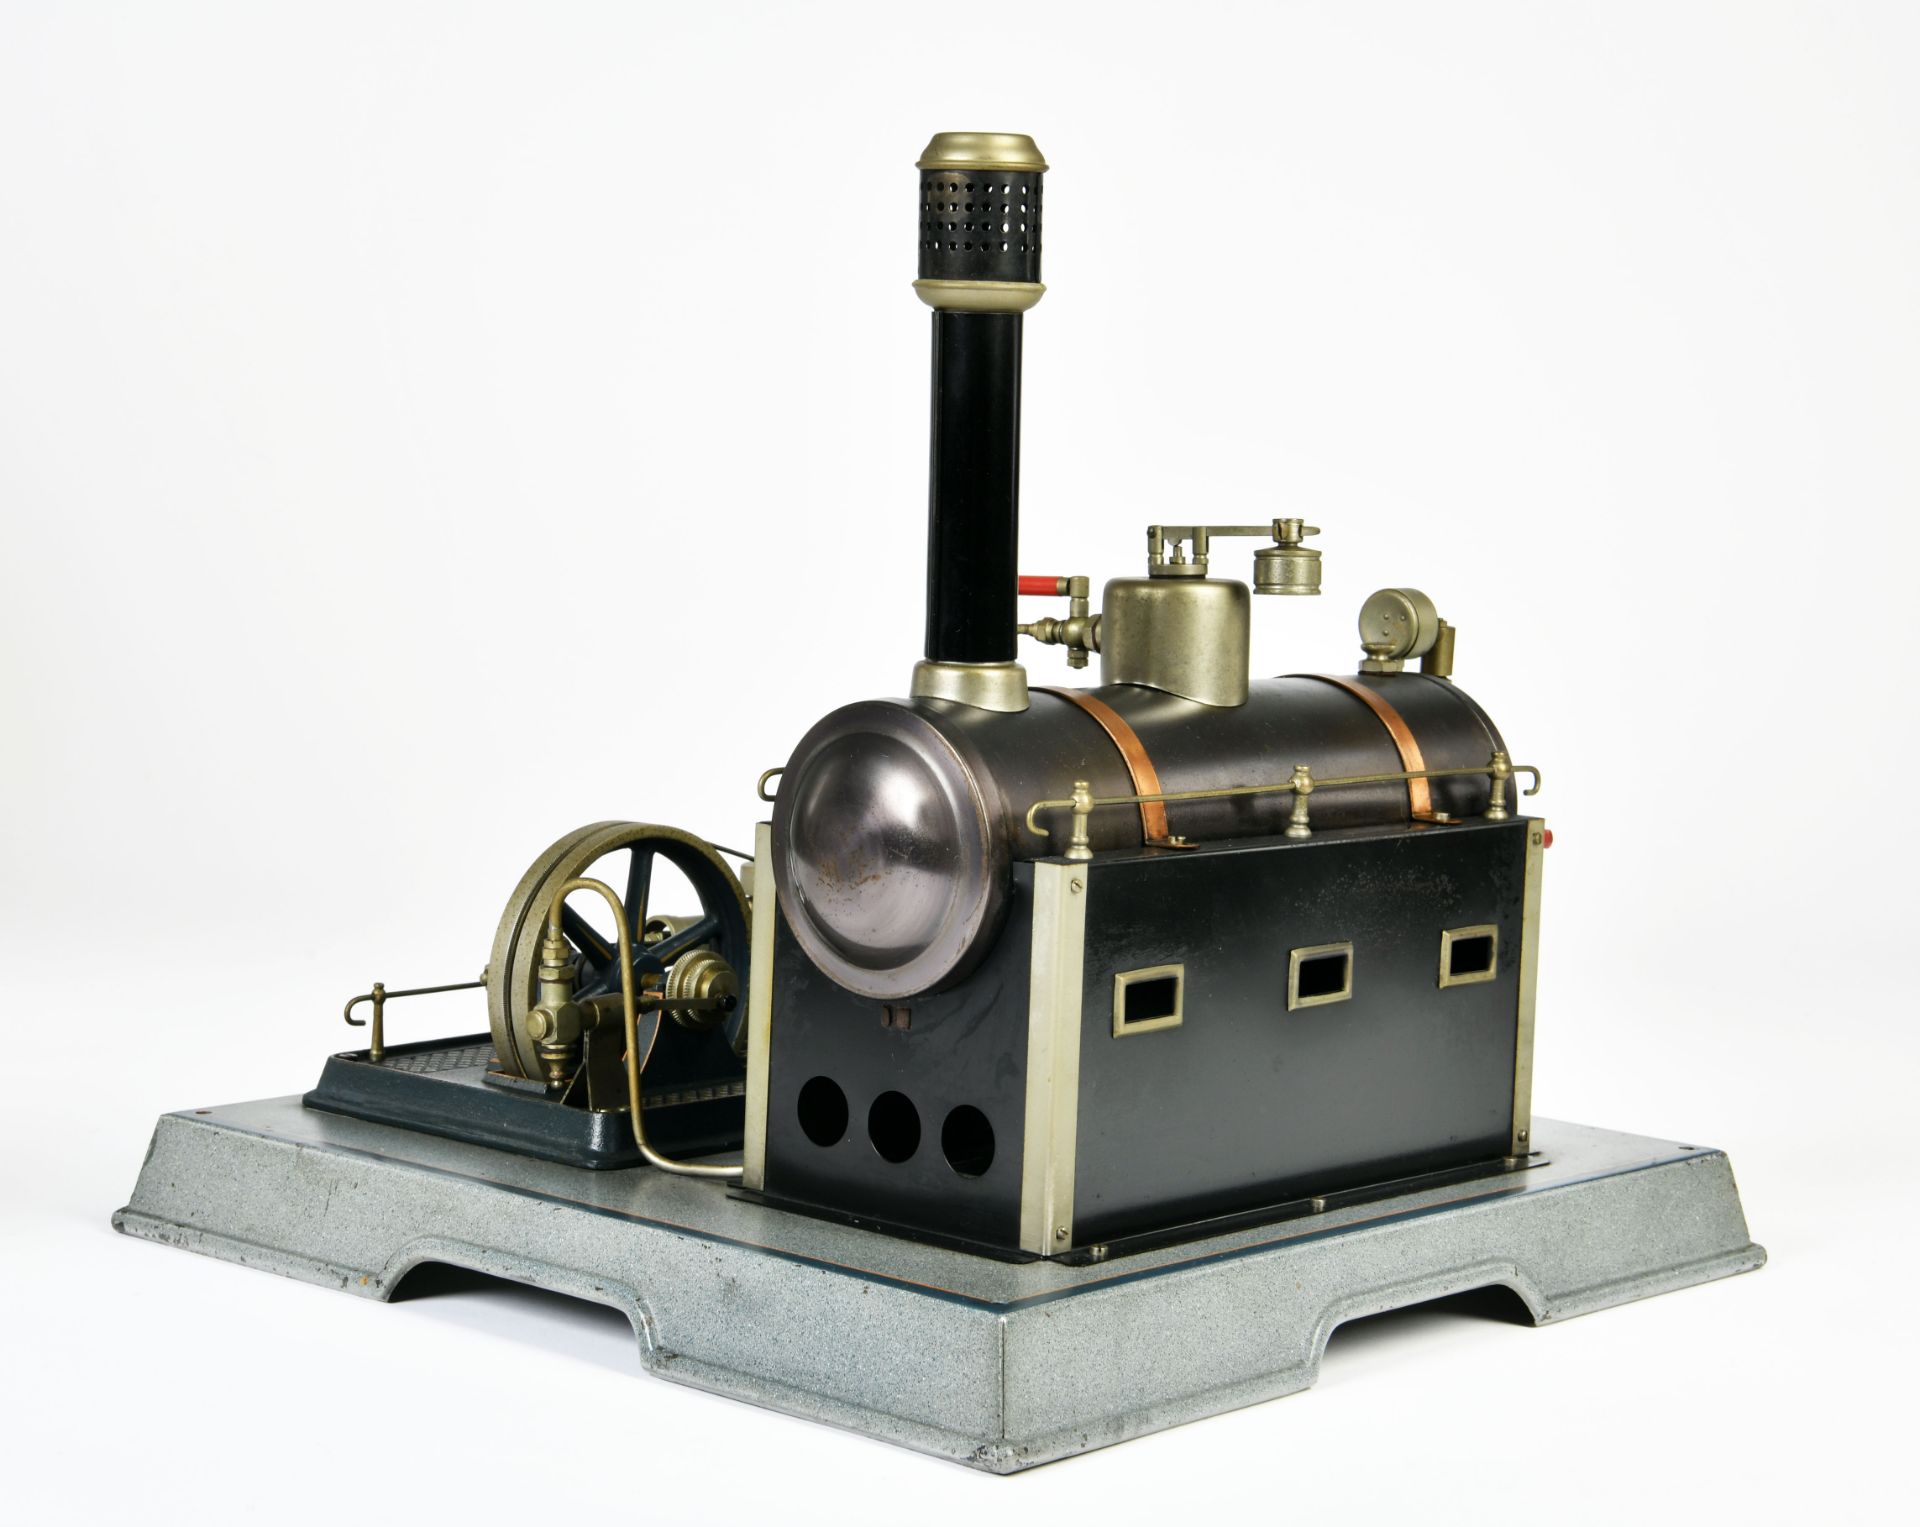 Märklin, steam engine with dynamo, Germany pw, base 37,5x37,5cm, boiler 27cm, good condition - Image 2 of 3